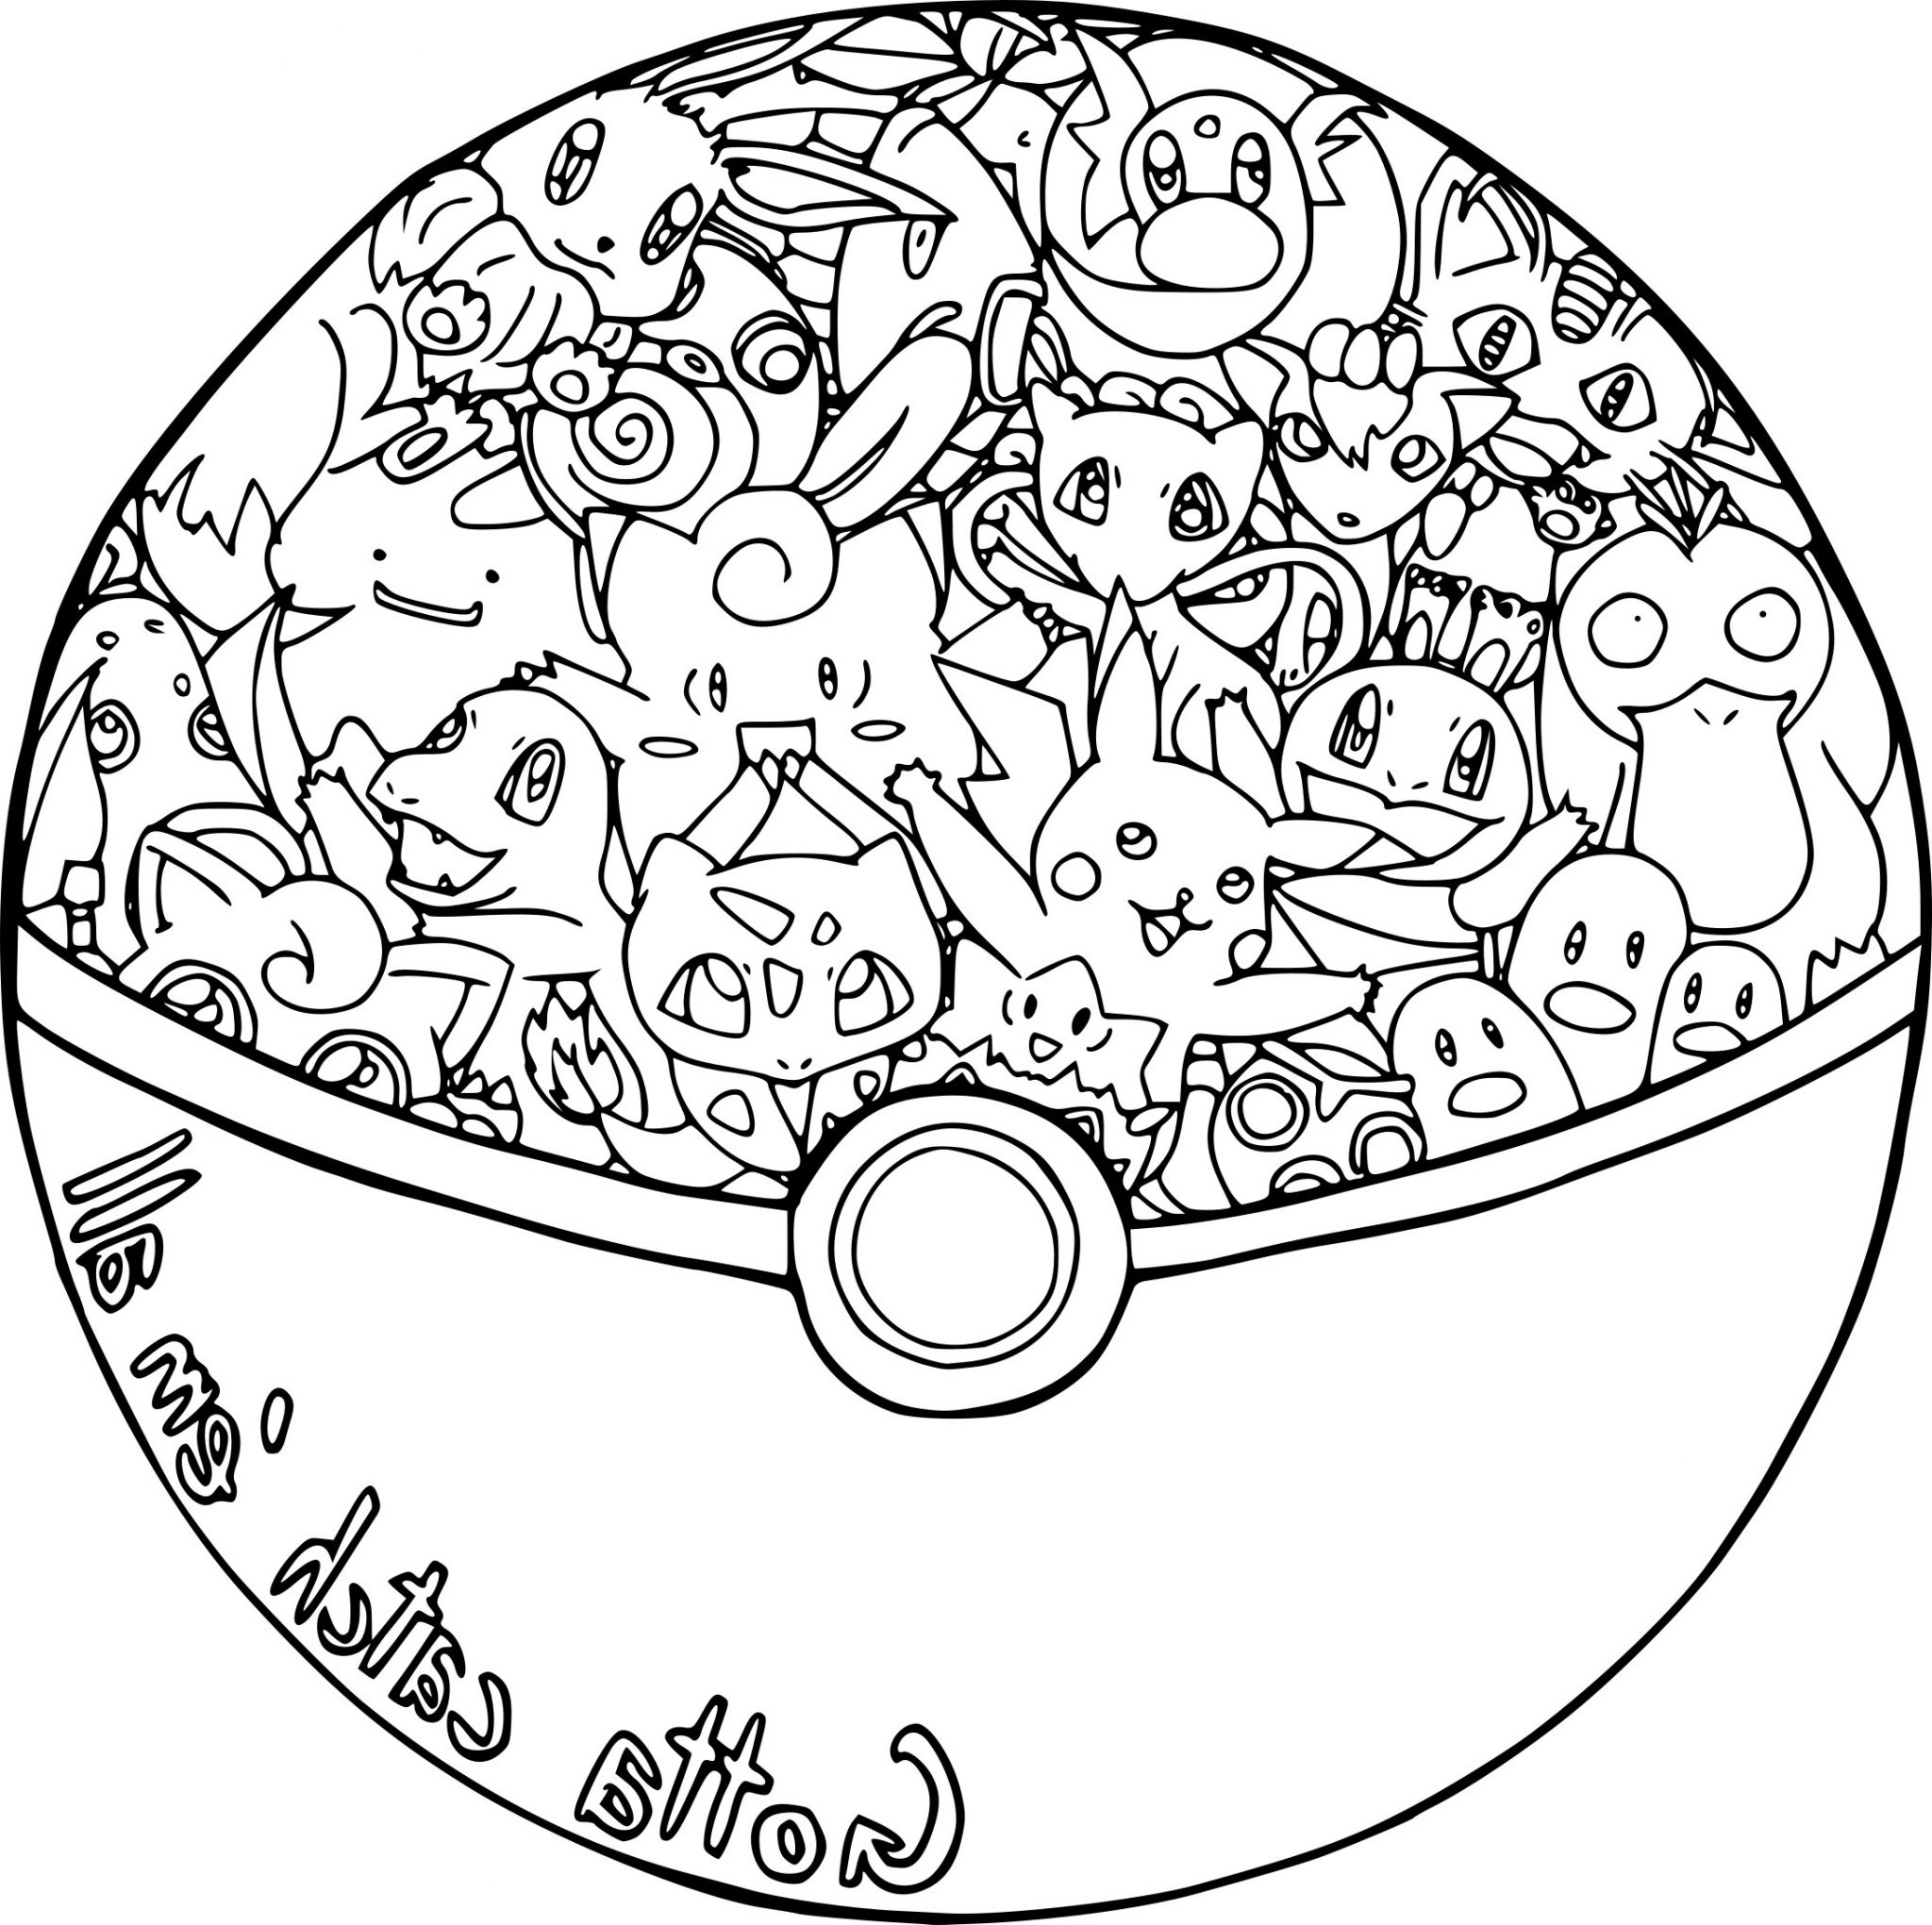 Dessin Mandala Pokemon Élégant Collection Inspirant Dessin A Imprimer dedans Coloriage Pokemon Mandala